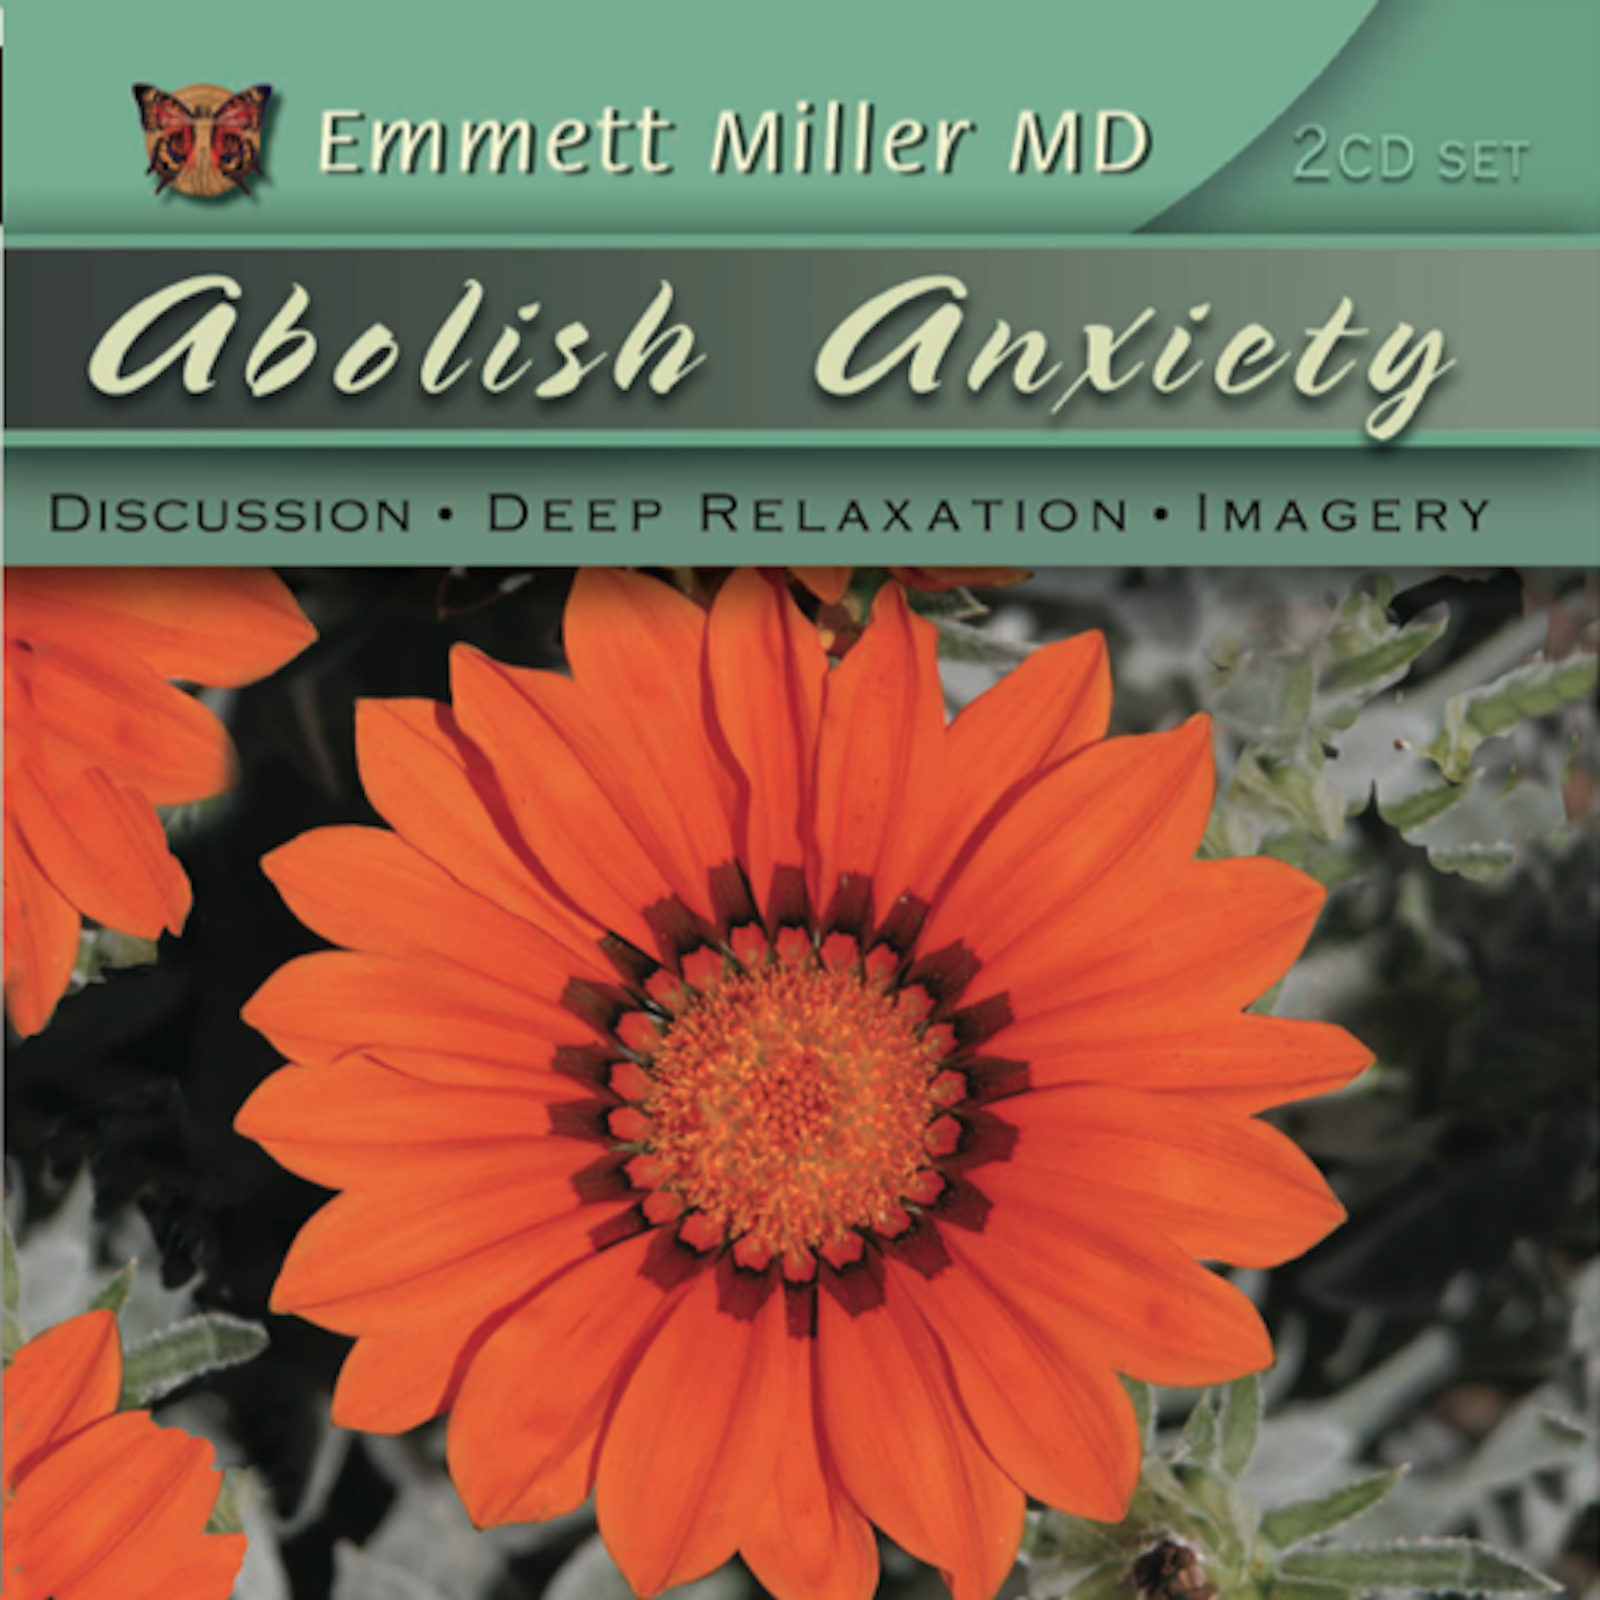 Abolish Anxiety with Dr. Emmett Miller Audio Program Dr. Emmett Miller - BetterListen!